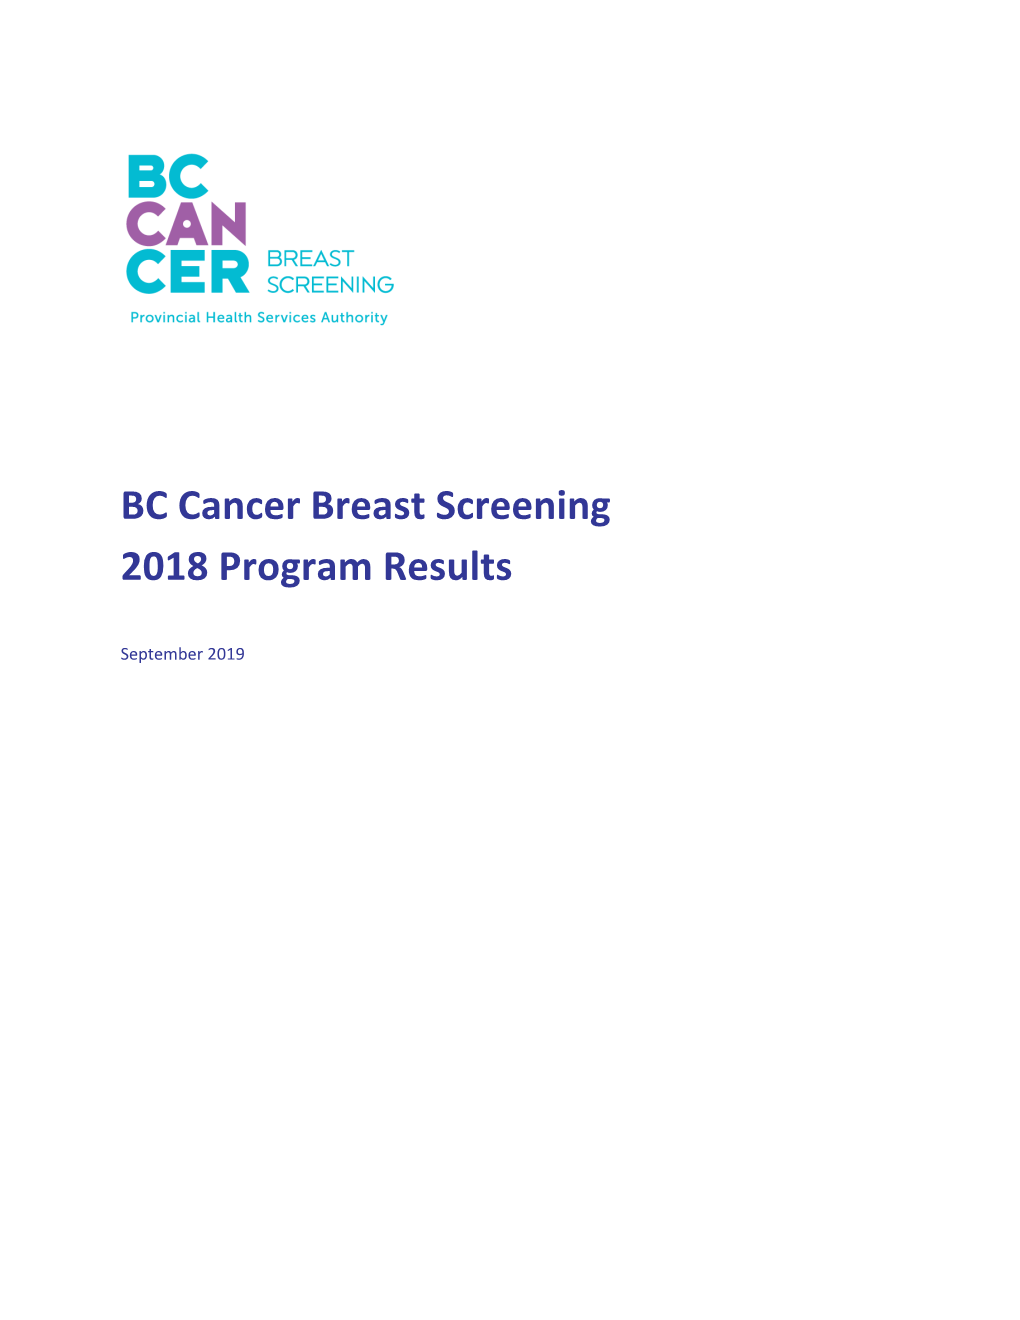 BC Cancer Breast Screening 2018 Program Results